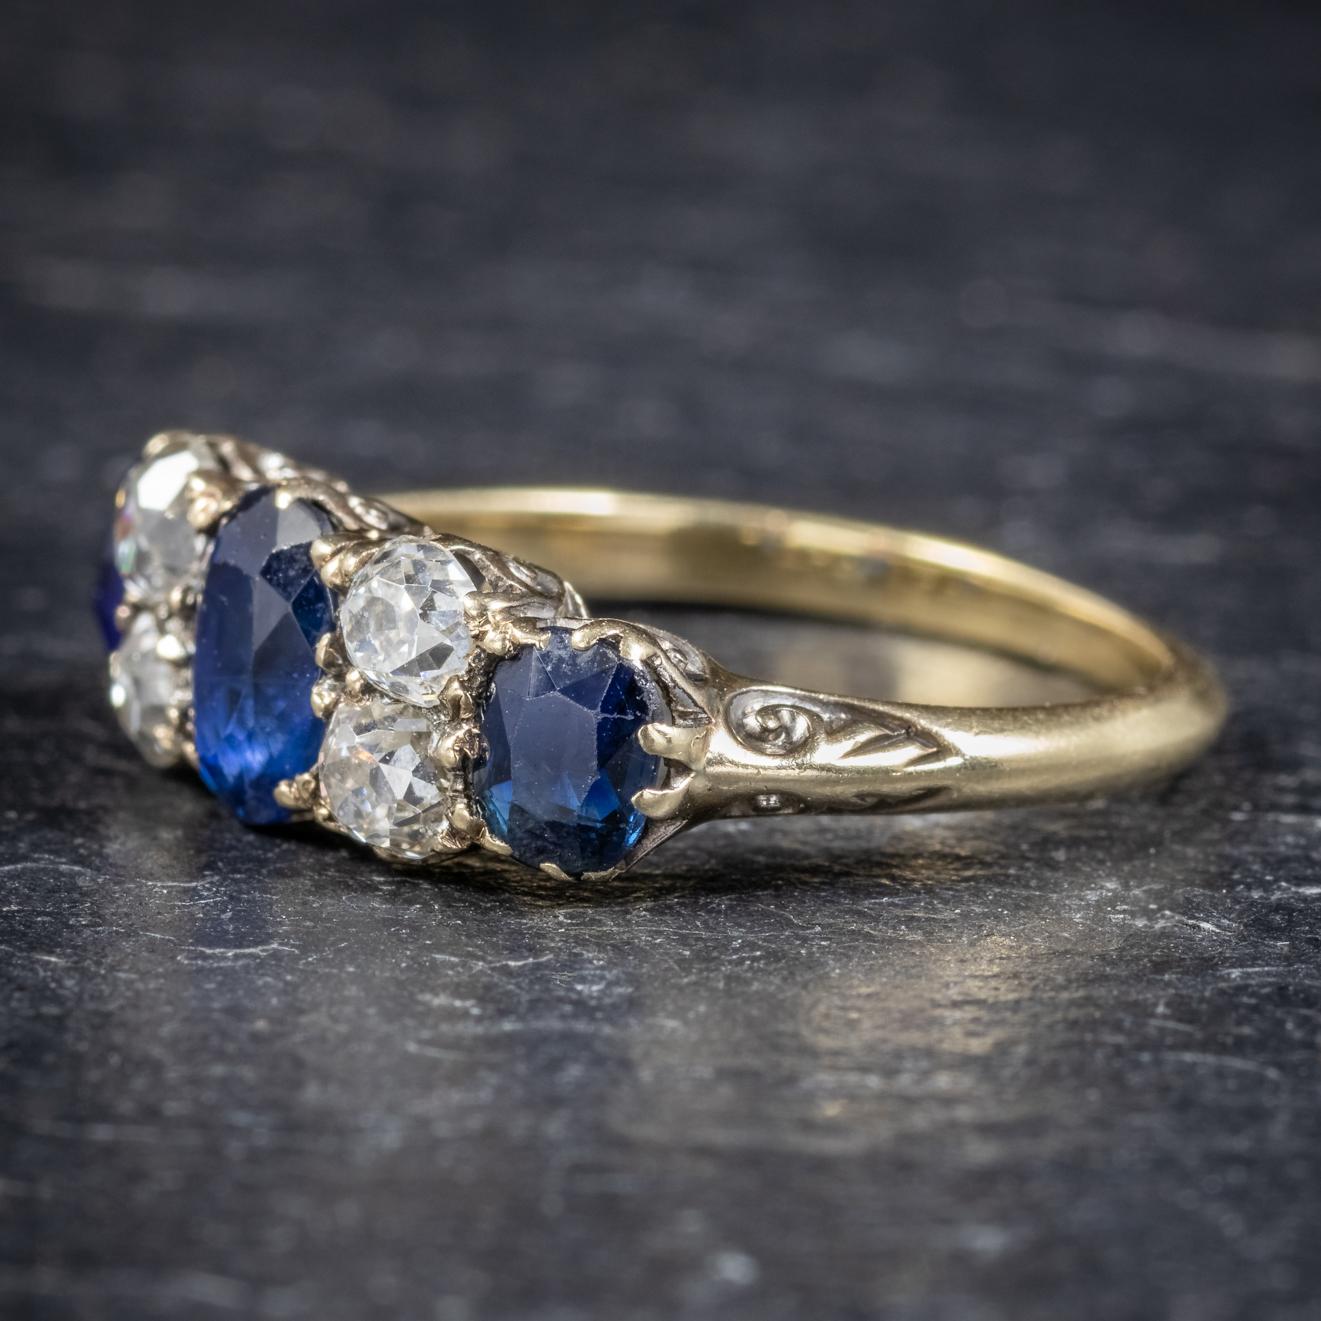 Antique Victorian Sapphire Diamond Five-Stone Ring 18 Carat Gold, circa 1900 (Viktorianisch)